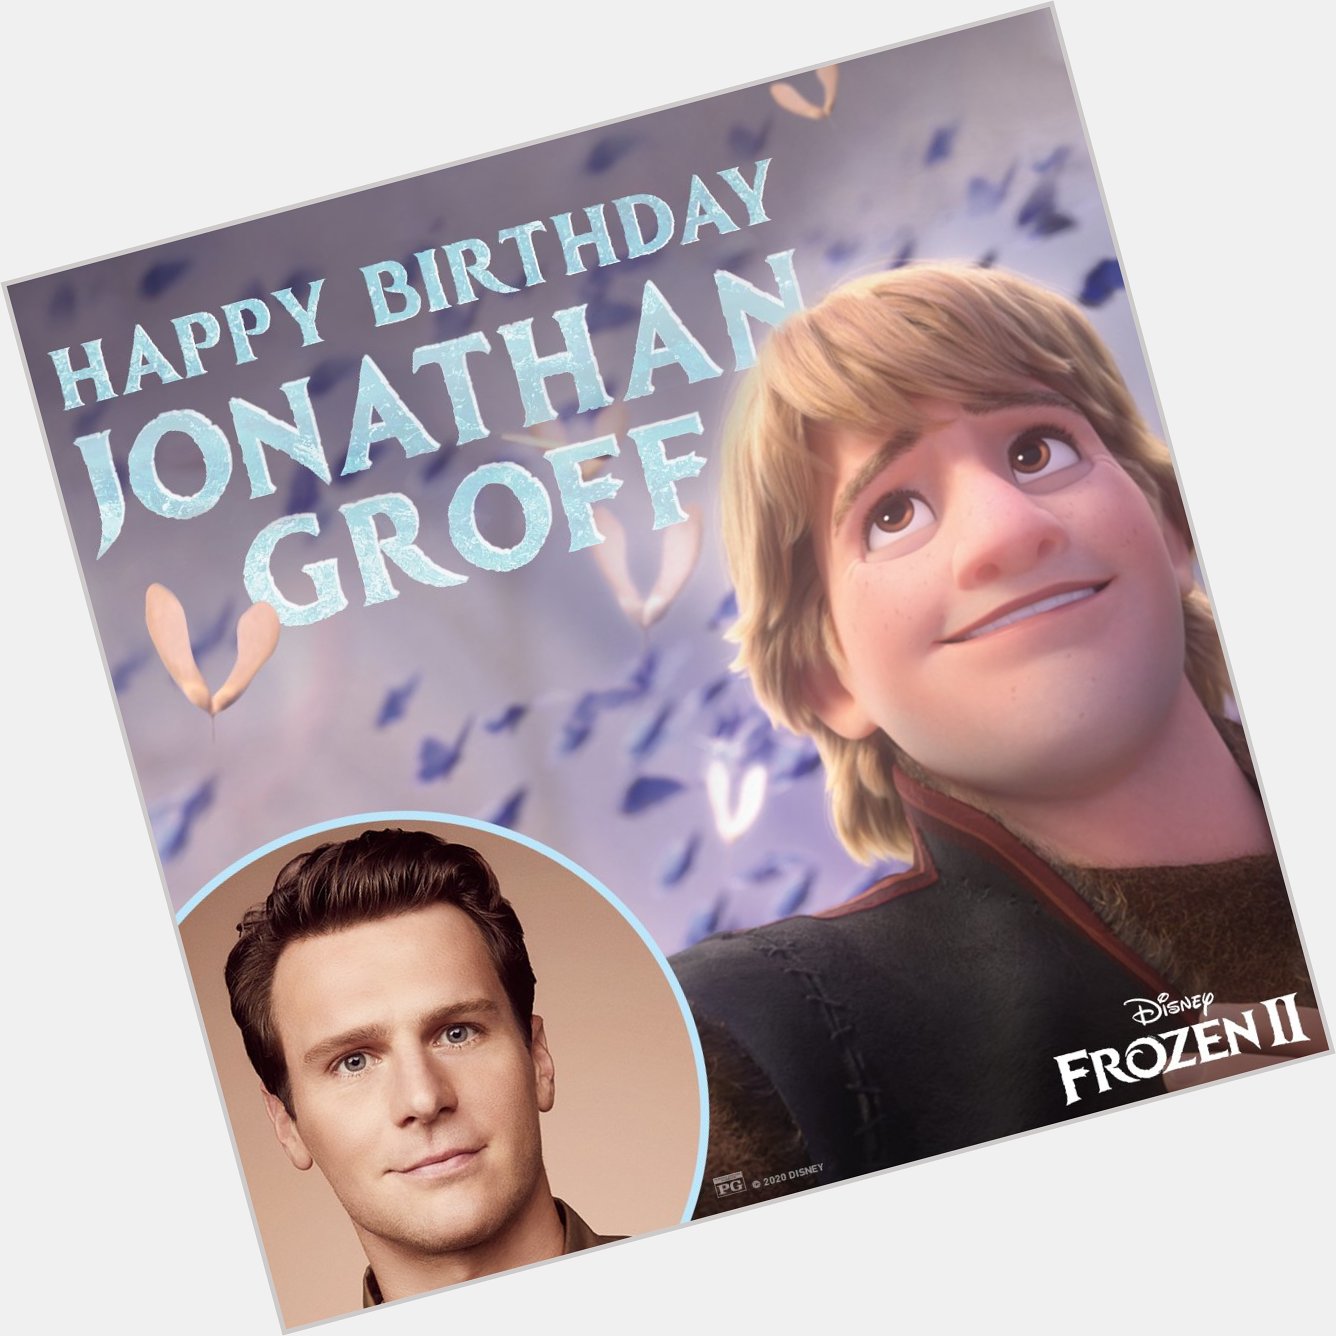 Happy birthday Jonathan Groff! 